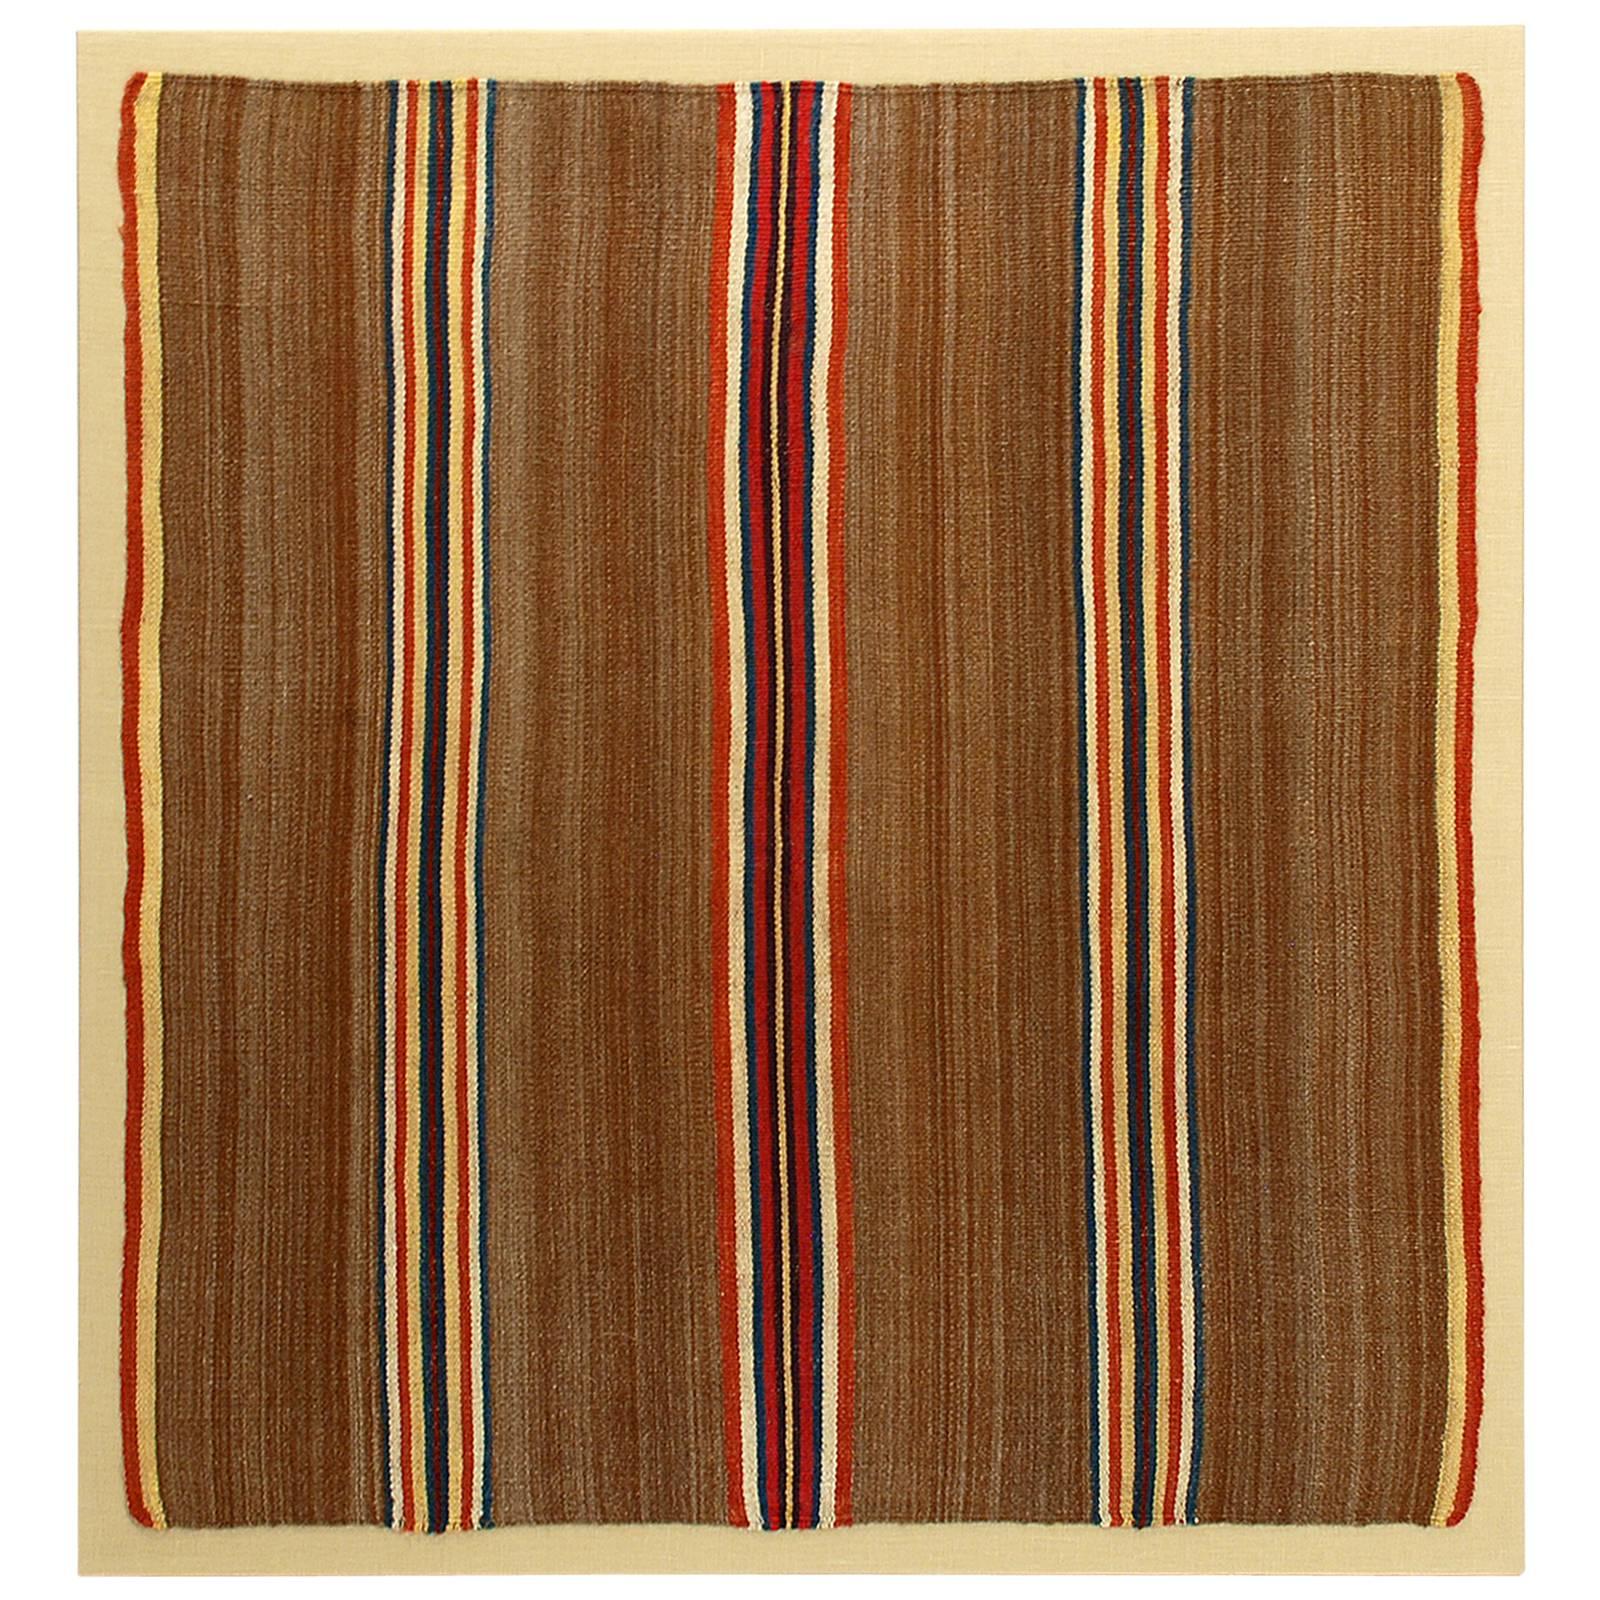 19th Century 'Tari' Shaman's Cloth in Natural Colors, circa 1880 For Sale